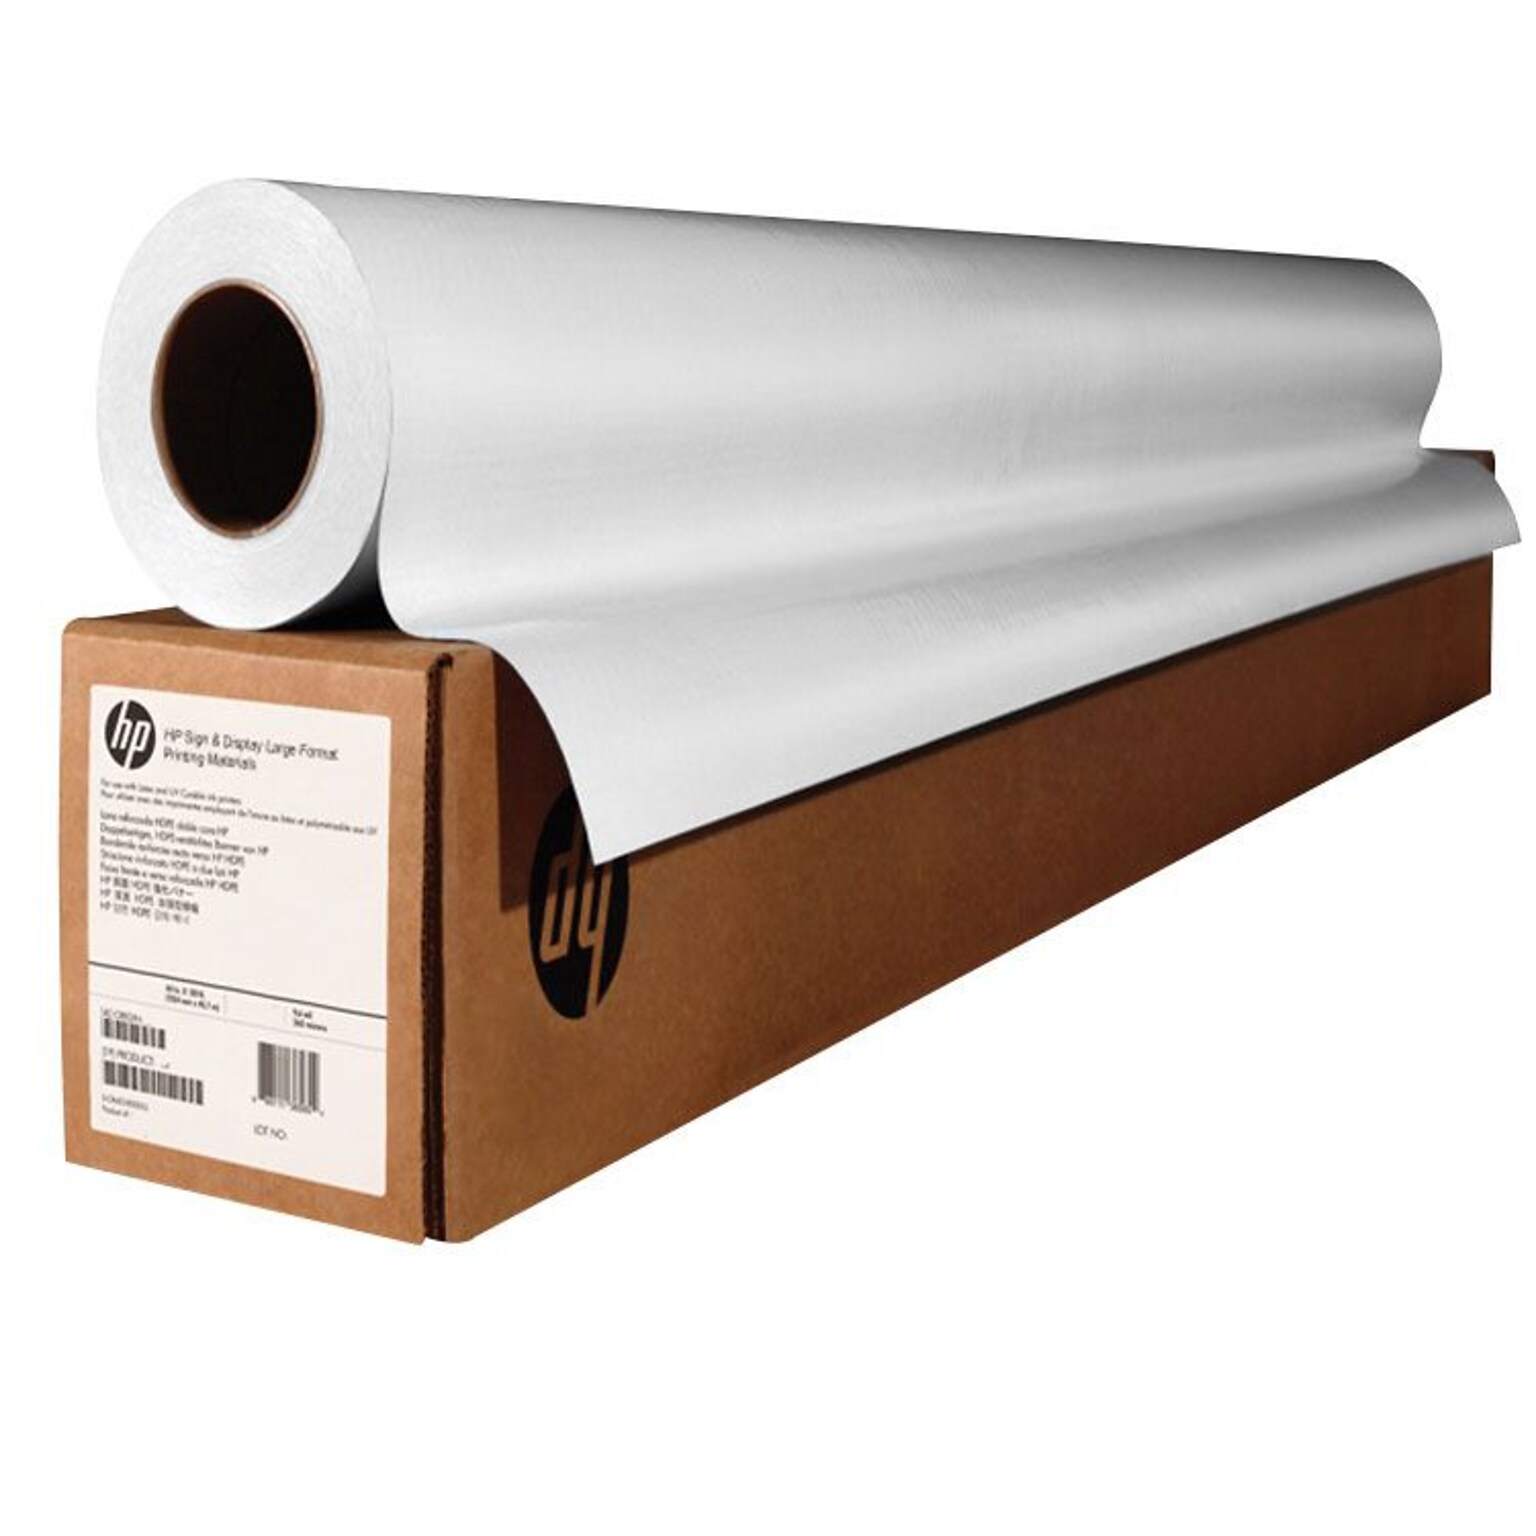 HP Bright White Inkjet Paper Wide Format Bond Paper Roll, 24 x 500 (L4Z44A)